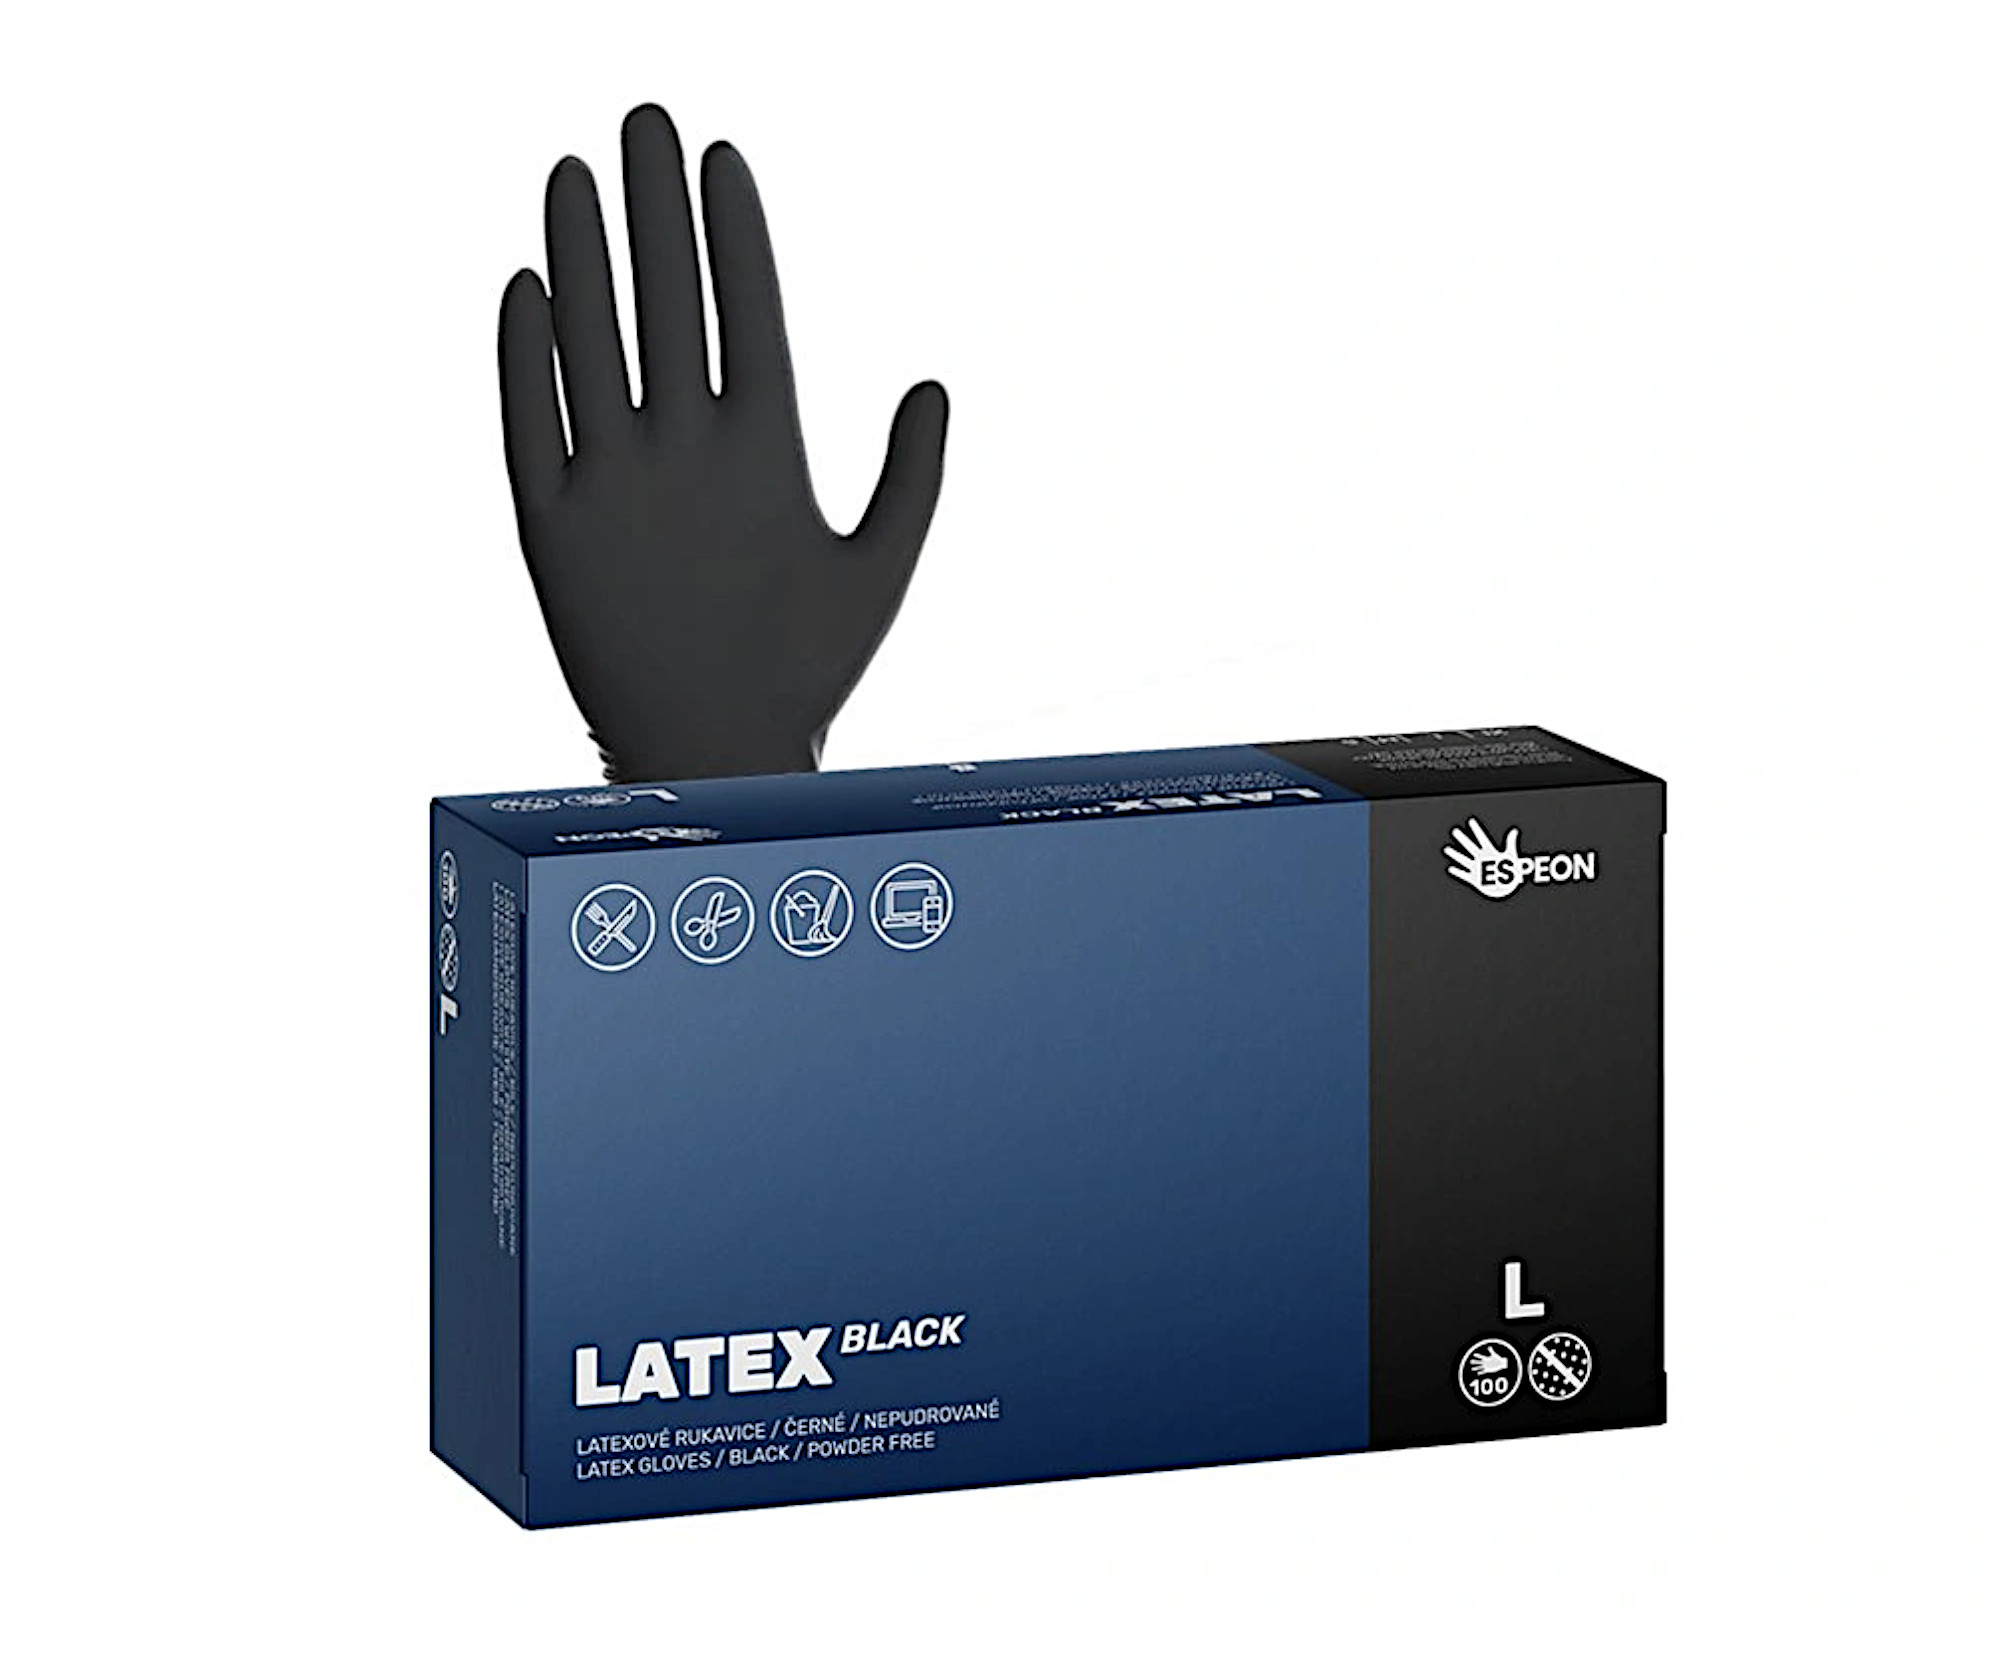 Latexové rukavice Espeon Latex Black - 100 ks, černé, velikost L (100069) + dárek zdarma